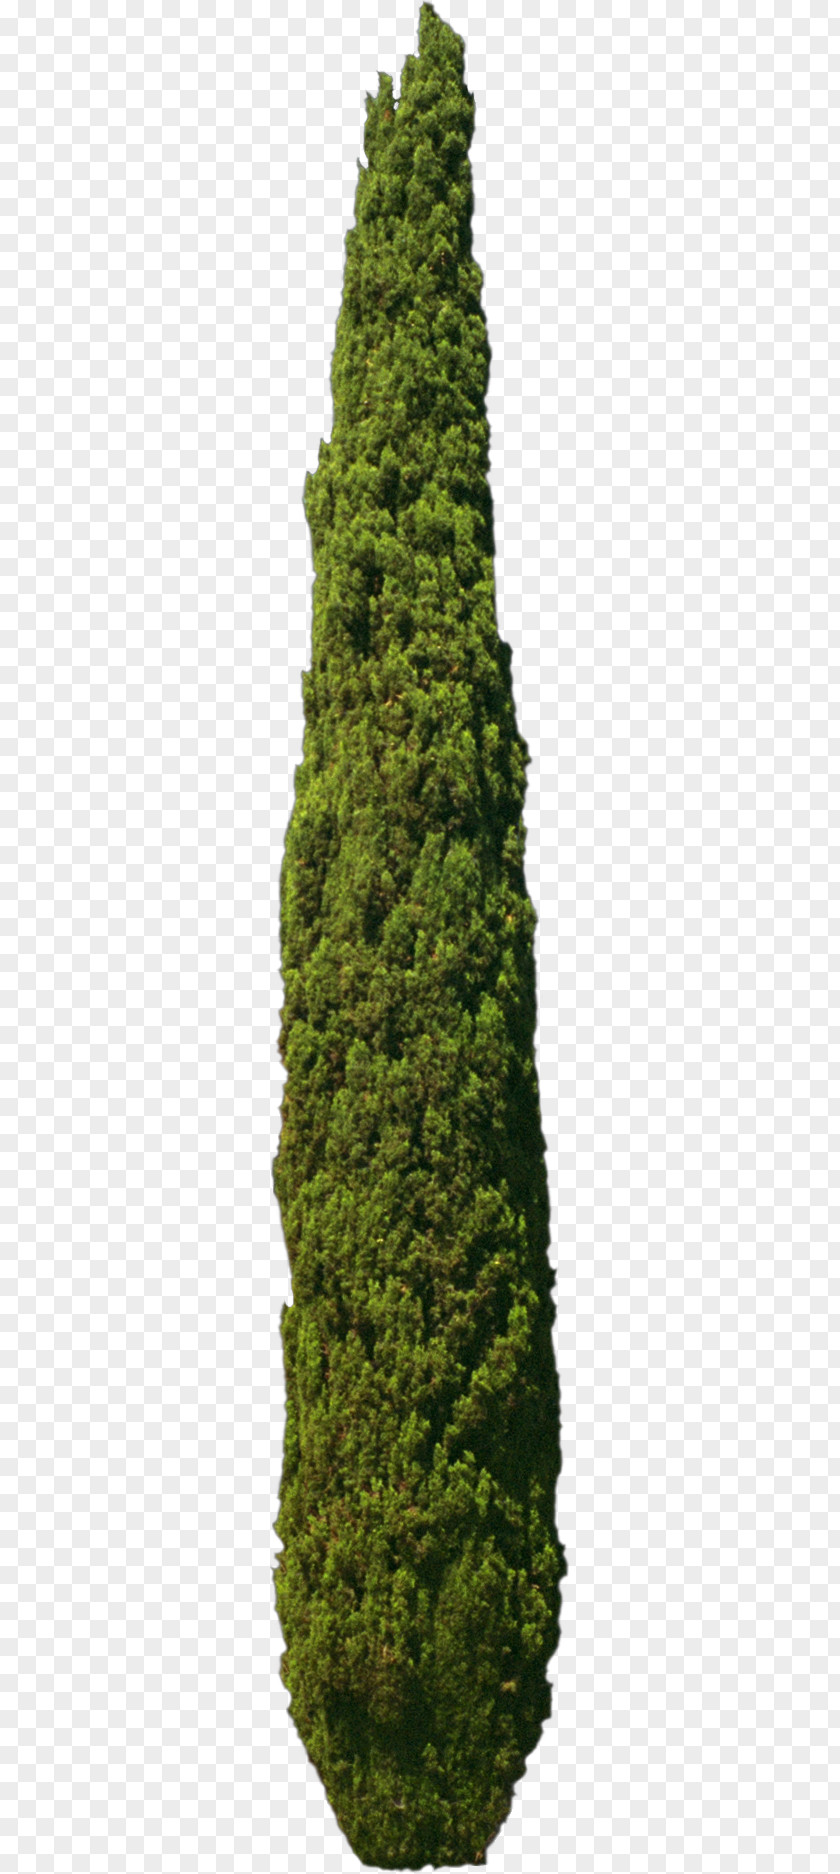 Tree Spruce Fir Mediterranean Cypress Pine Evergreen PNG